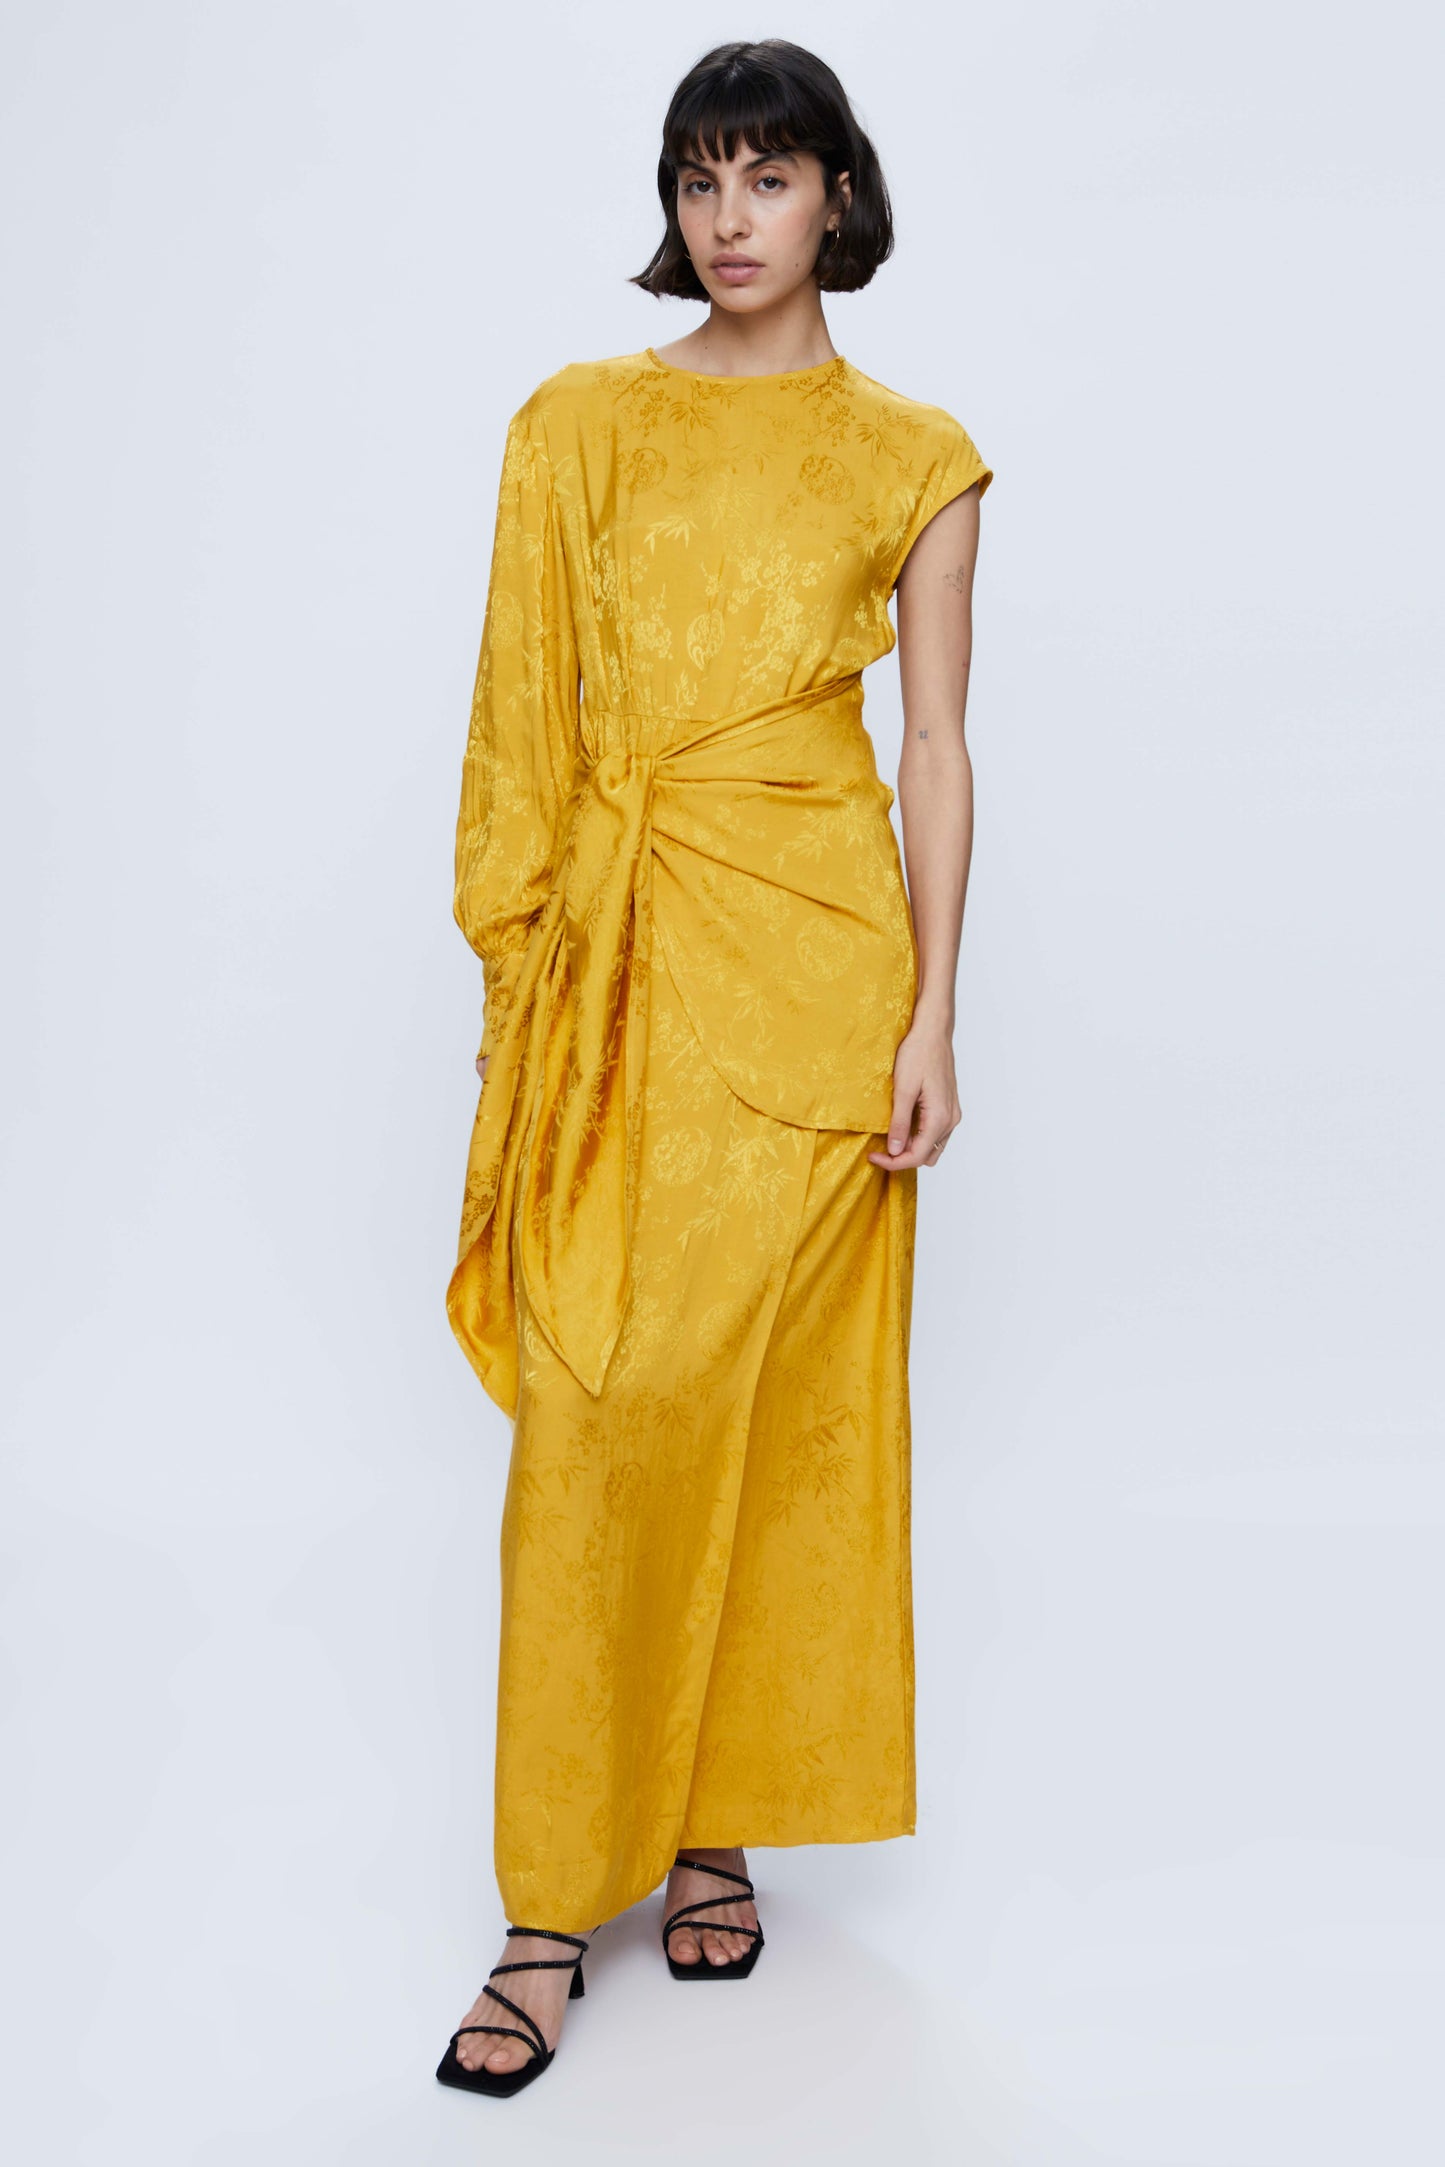 Asymmetrical midi dress in yellow jacquard